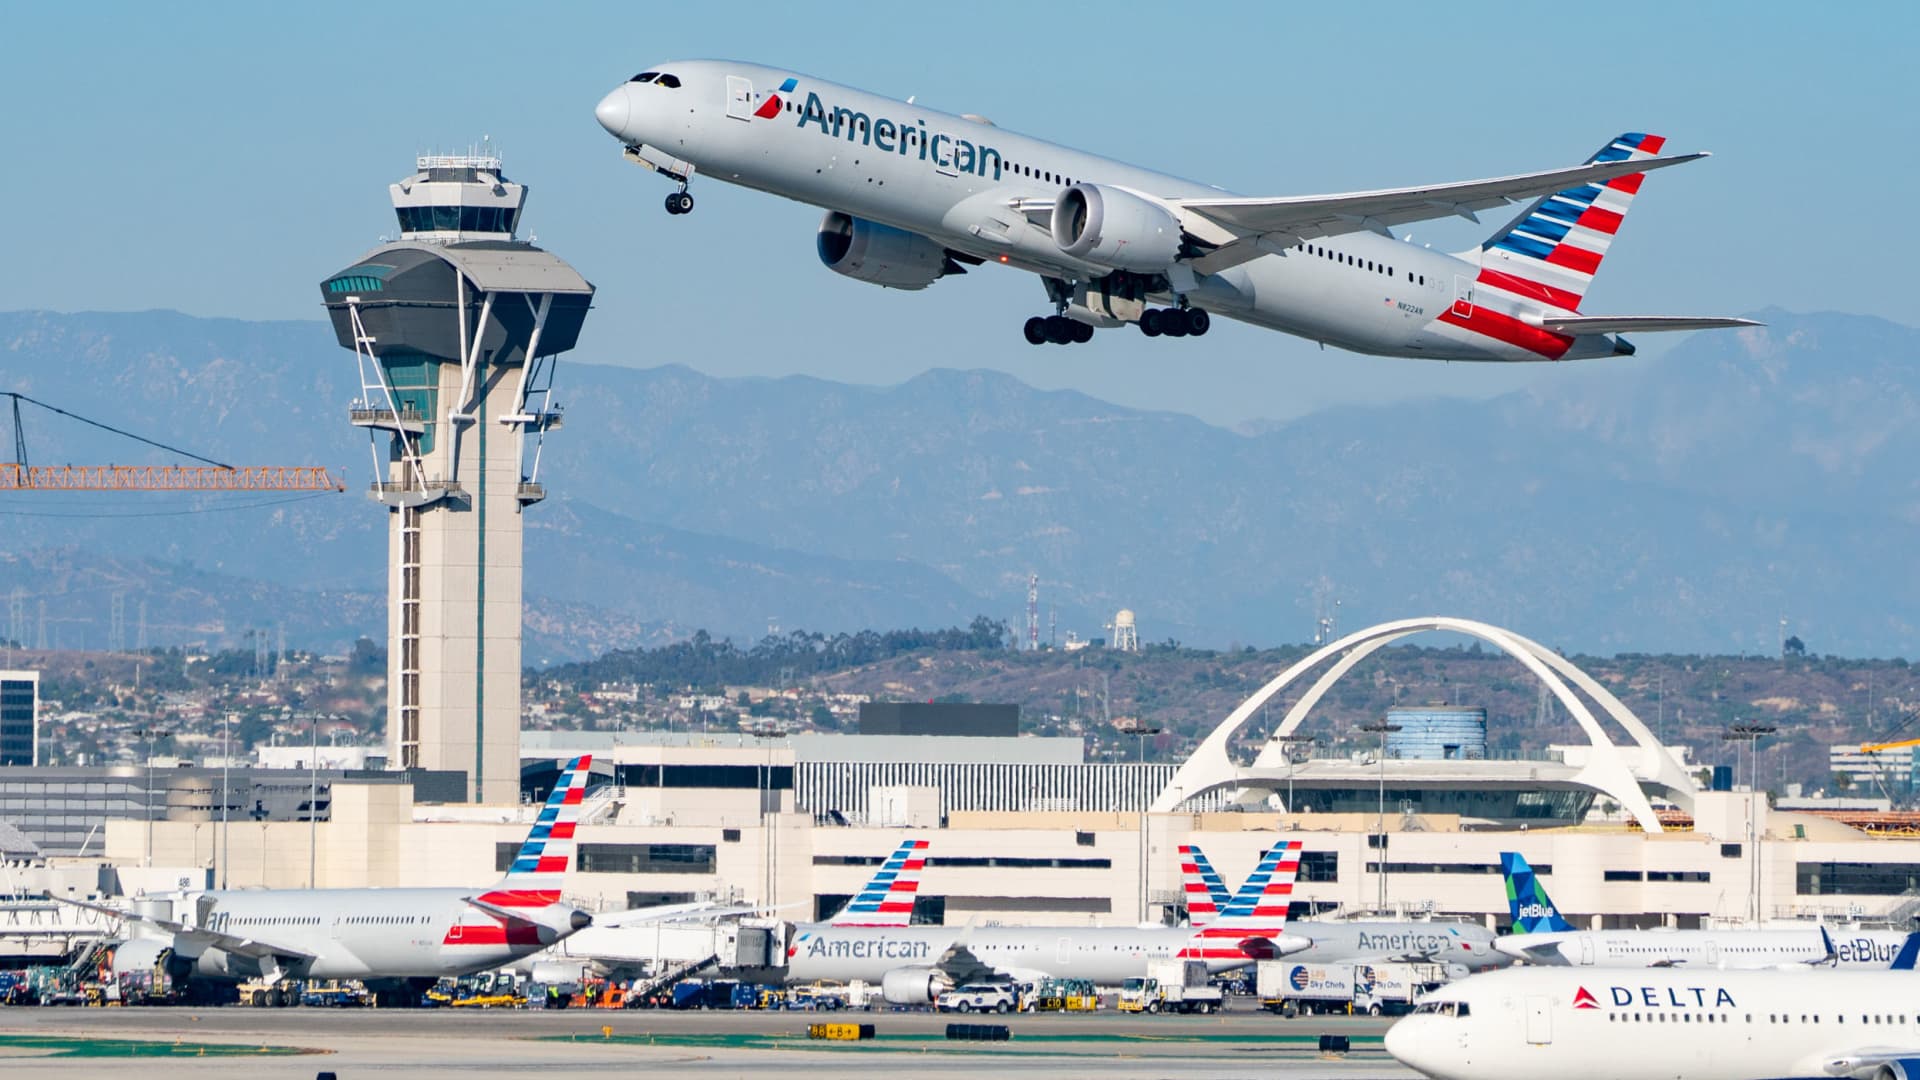 American Airlines (AAL) 1Q 22 earnings